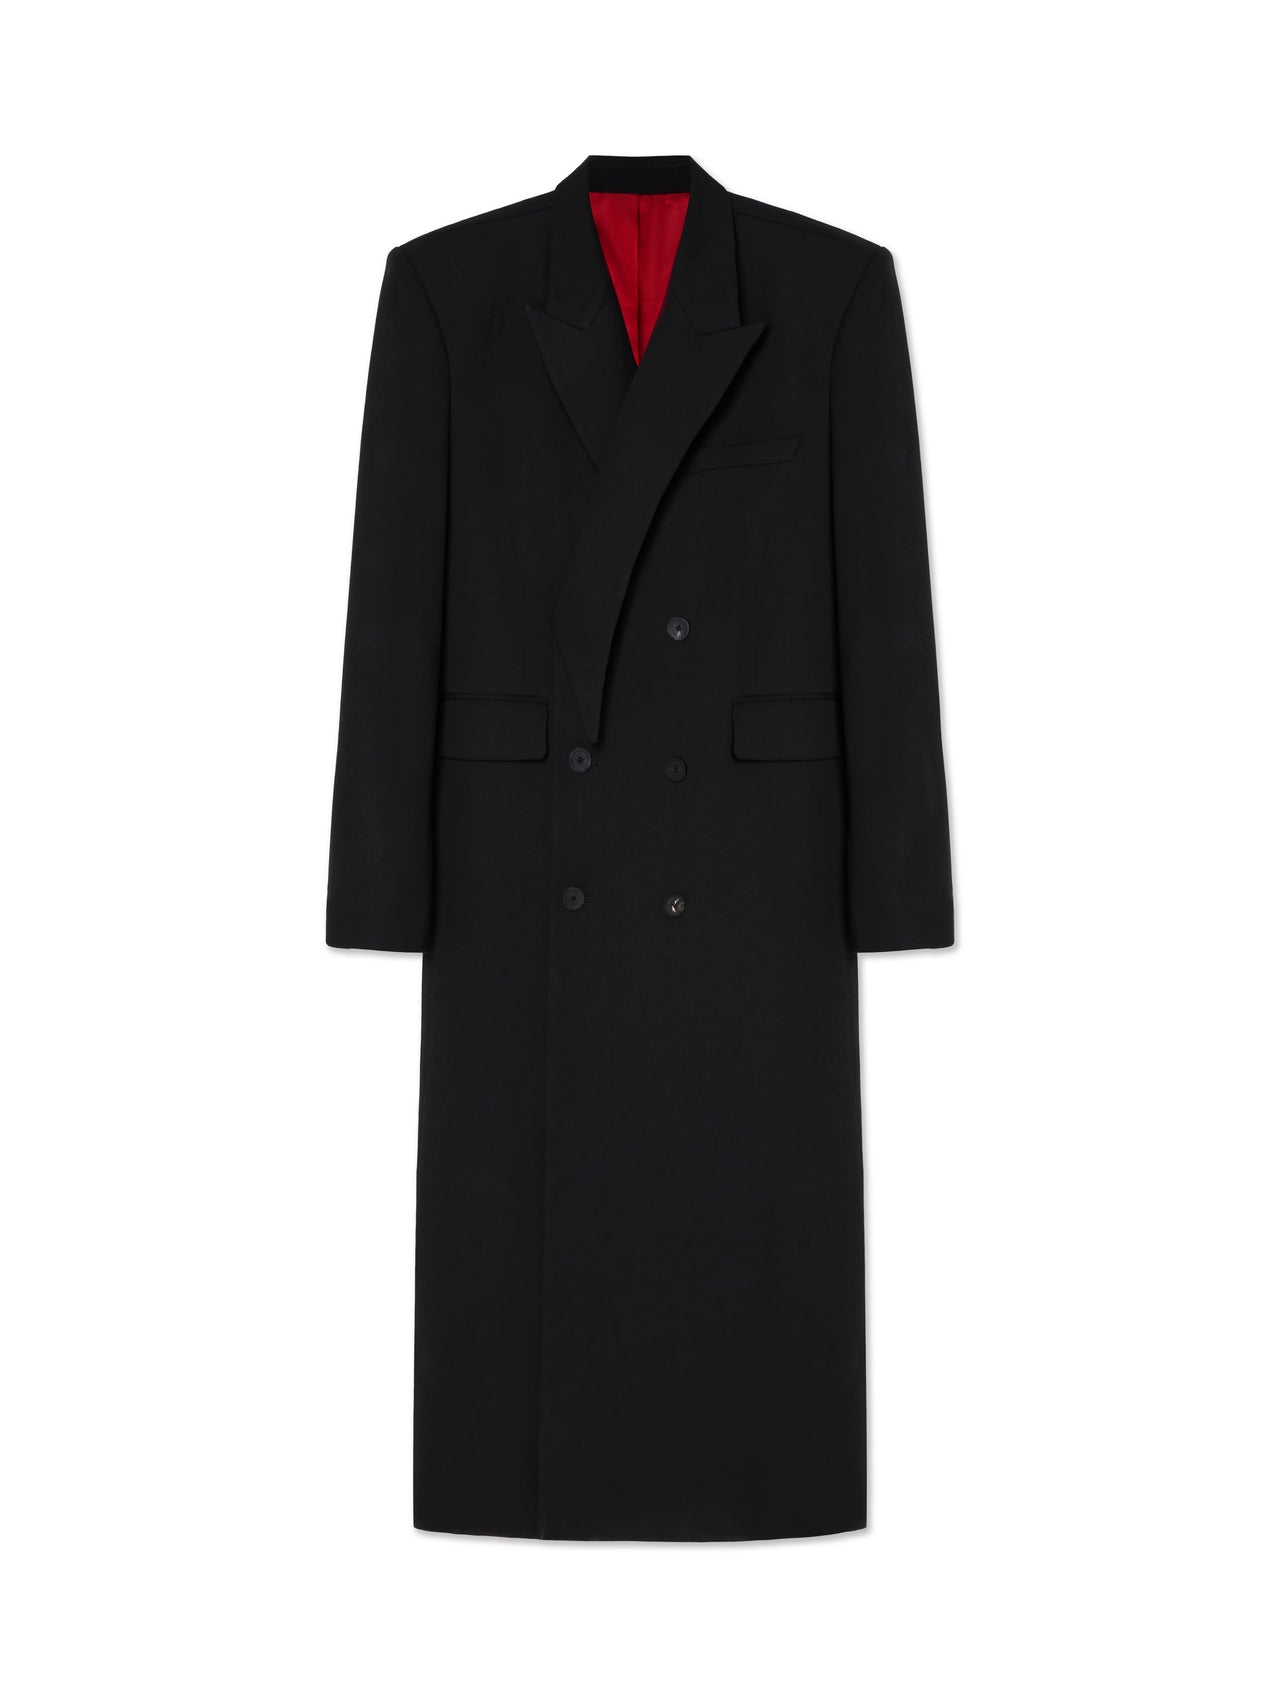 Black red Overcoat